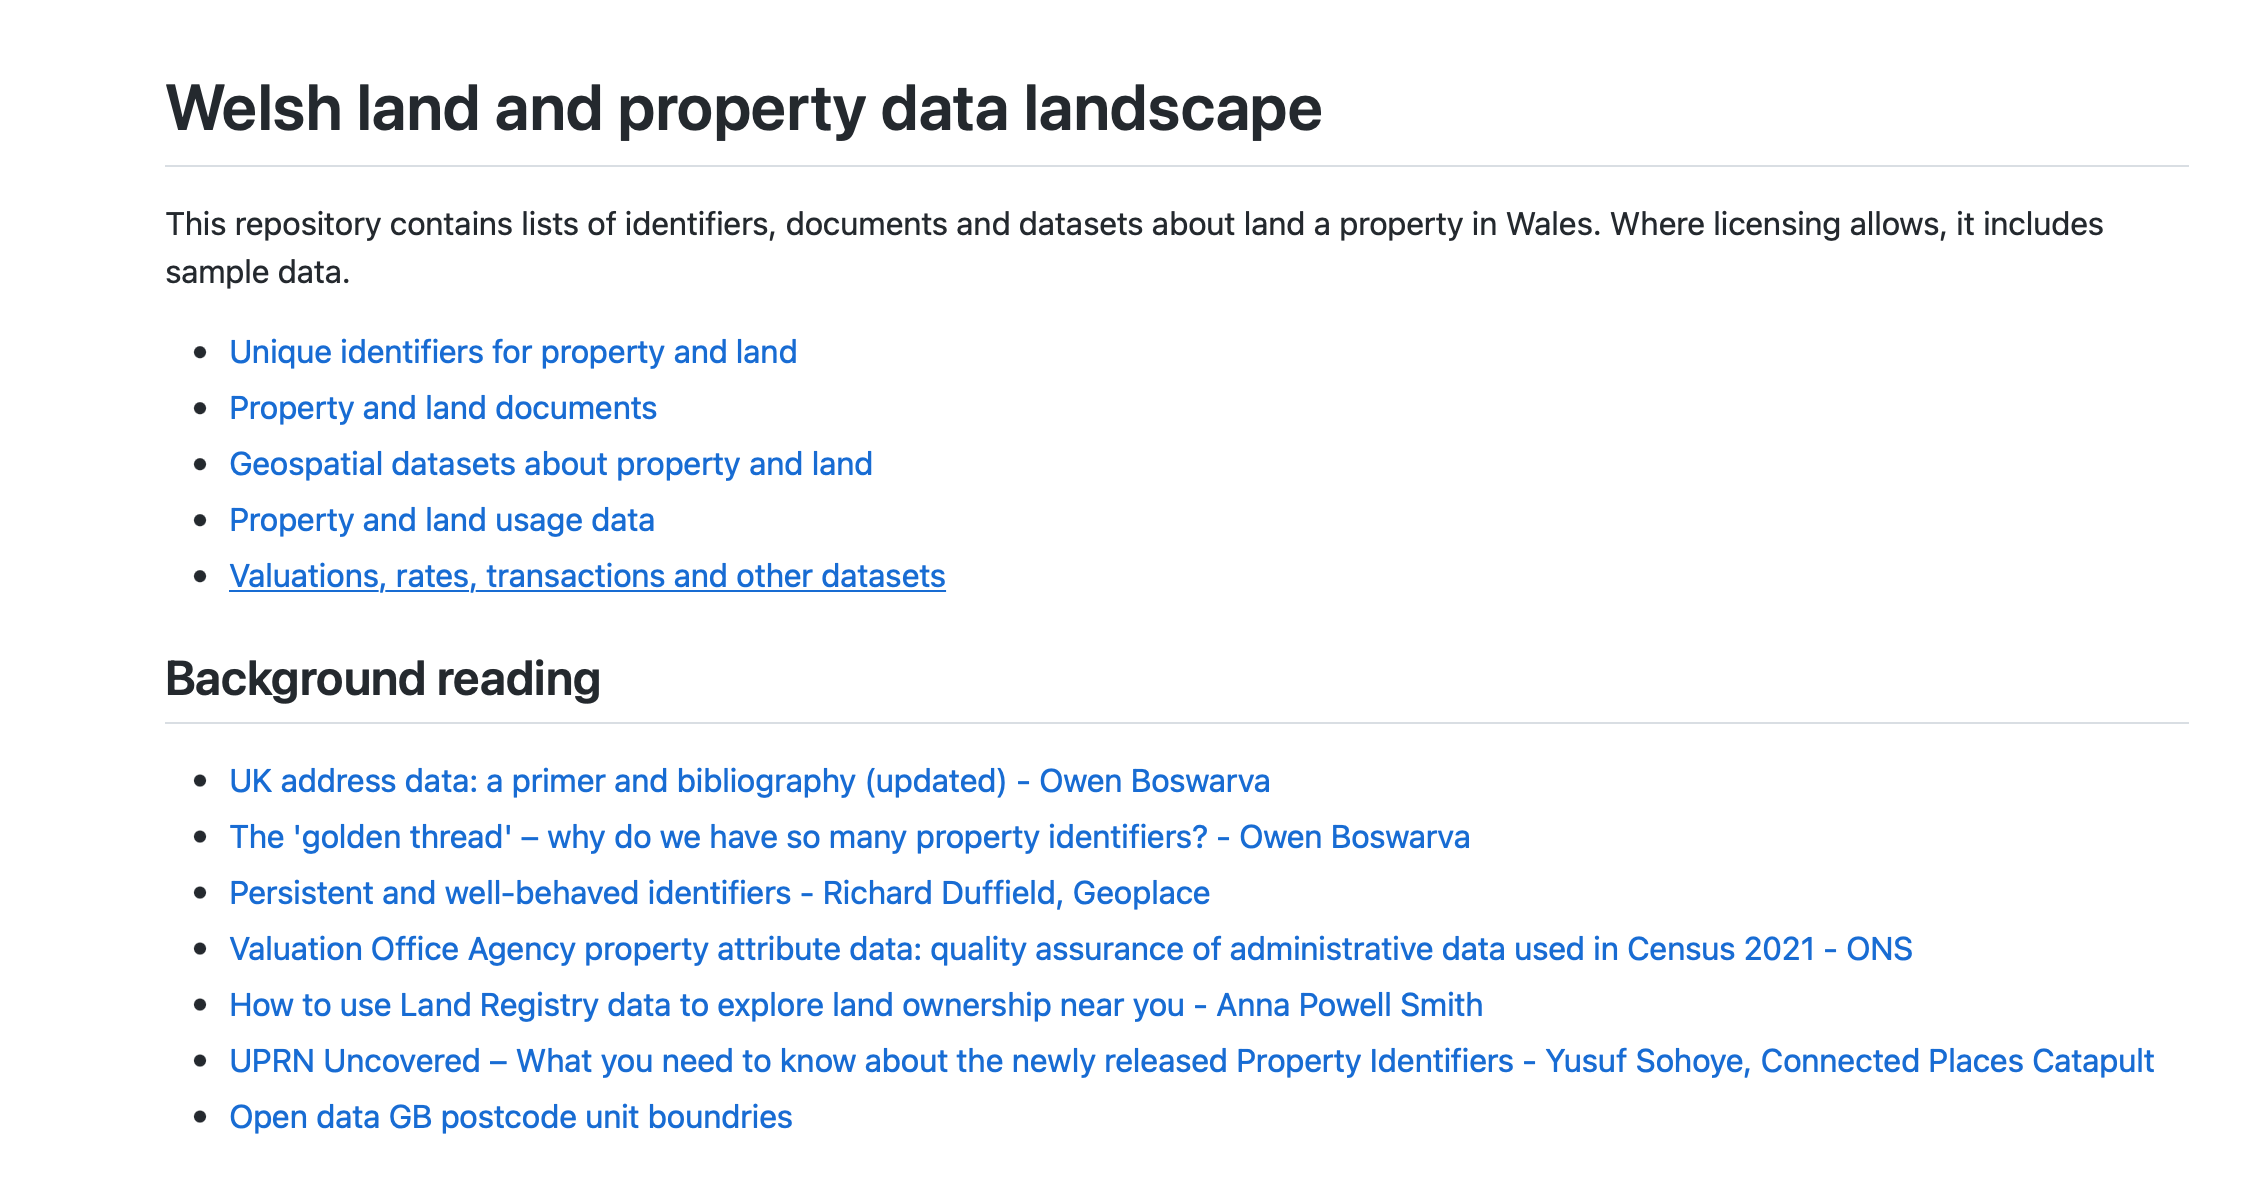 Screenshot of the data landscape website